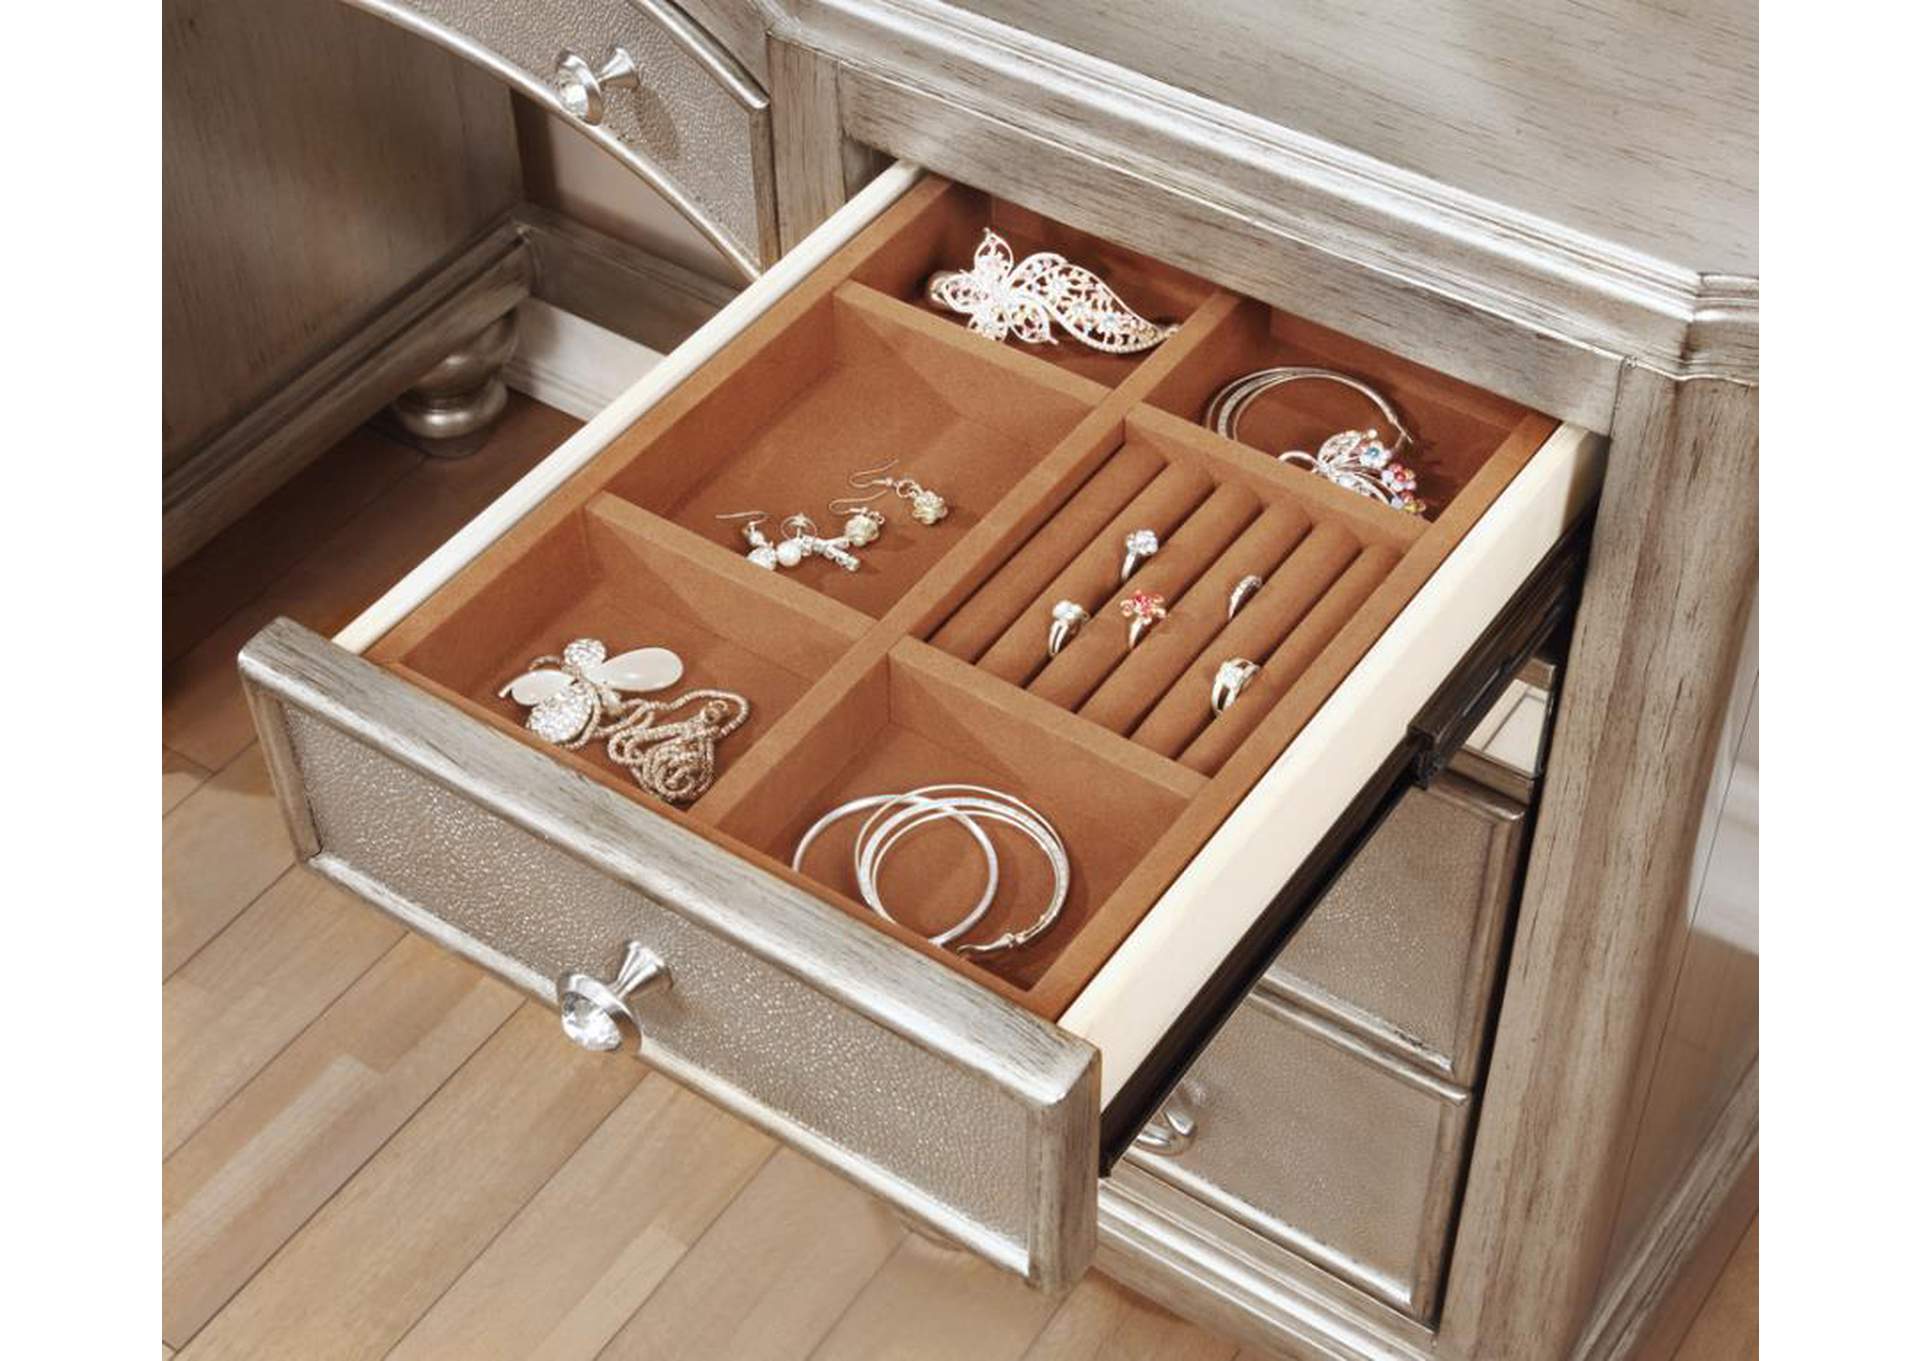 9-drawer Vanity Desk Metallic Platinum,Coaster Furniture